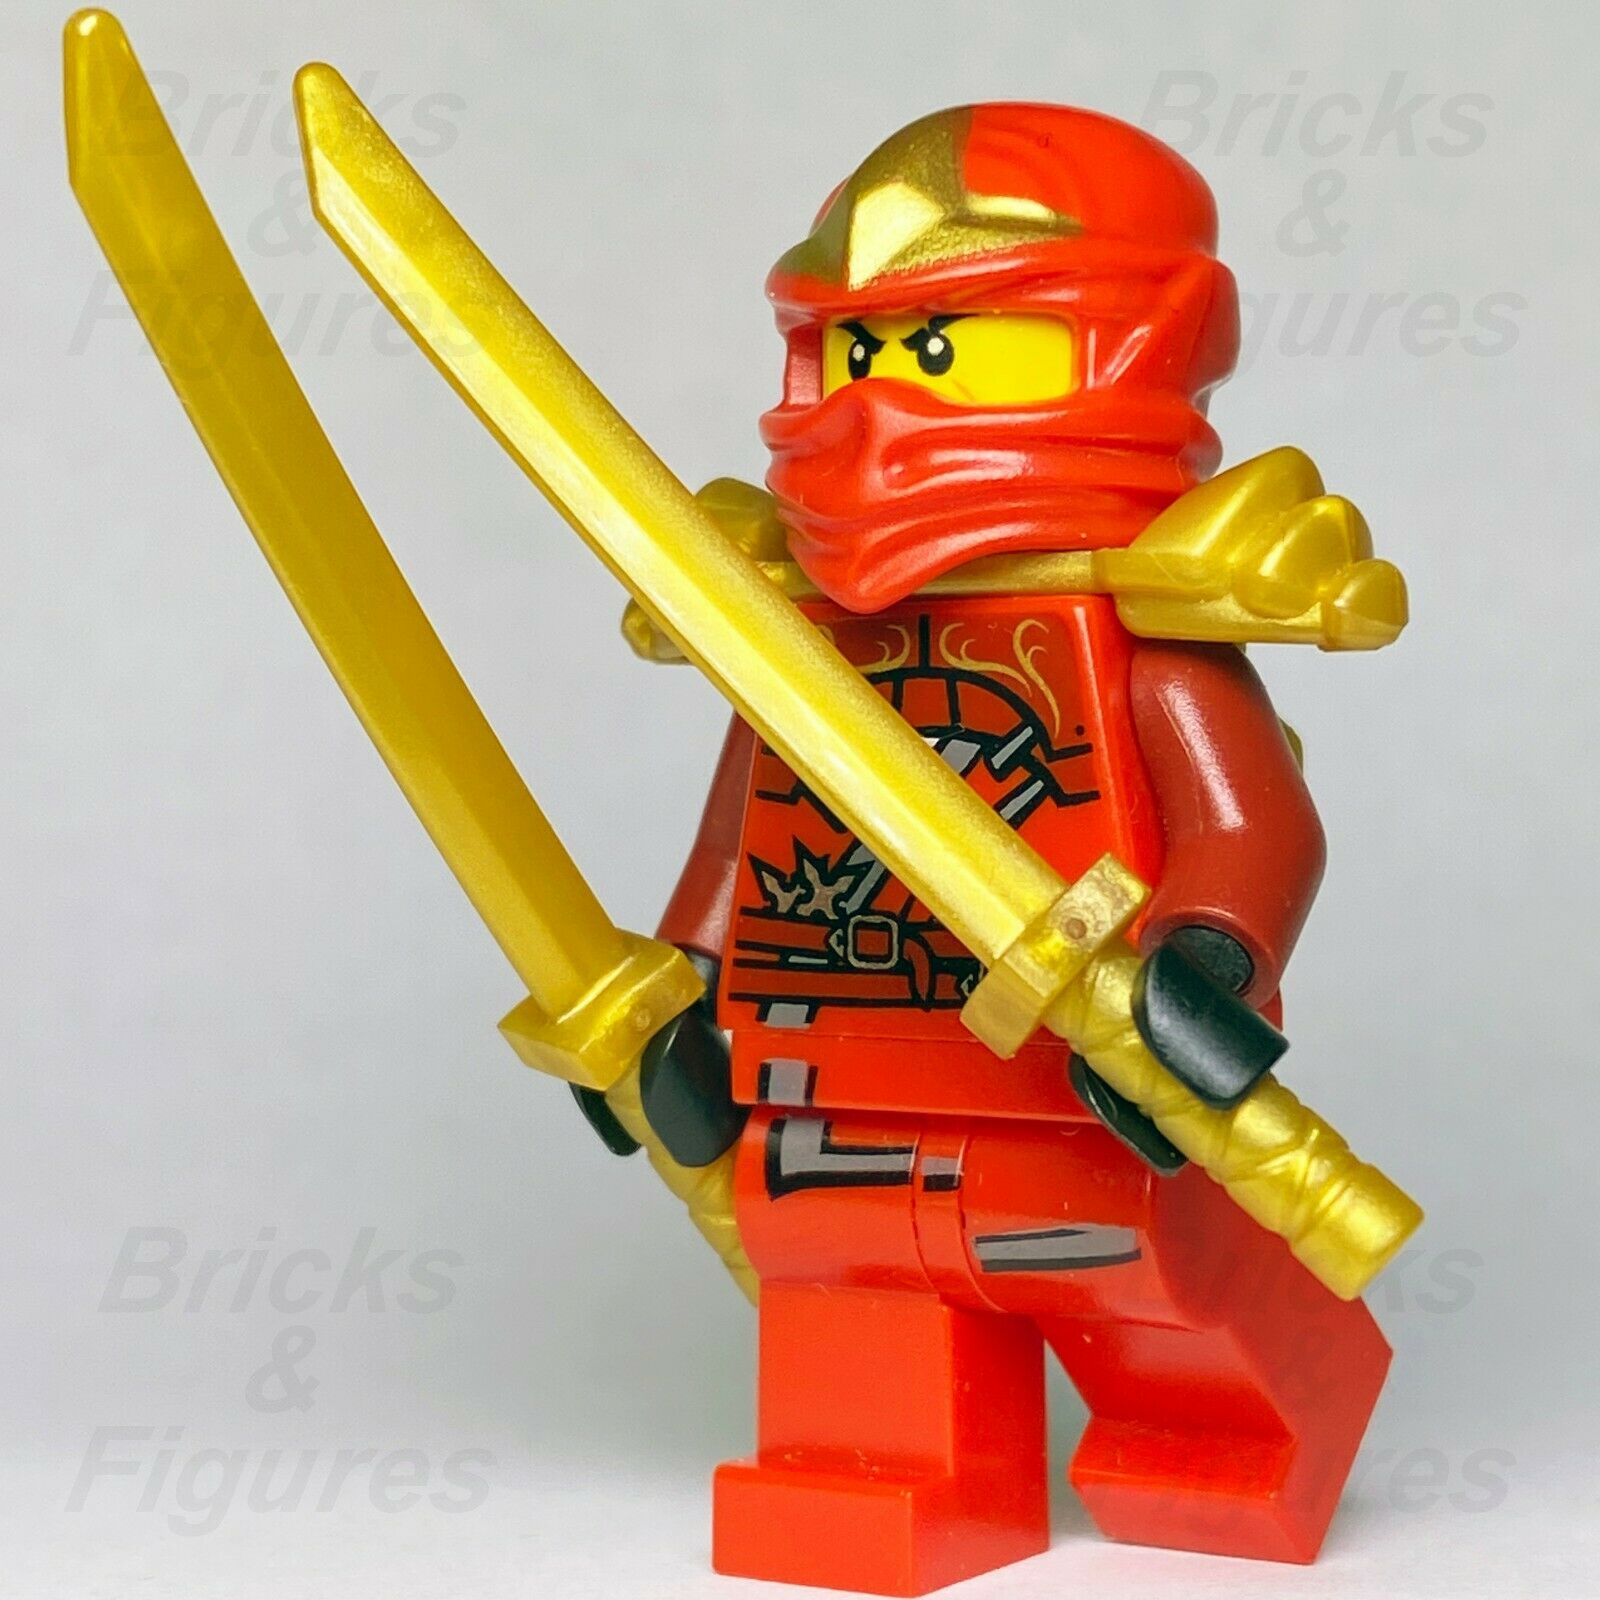 New Ninjago LEGO Kai ZX Red Ninja Minifigure from sets 9561 9441 9449  Genuine